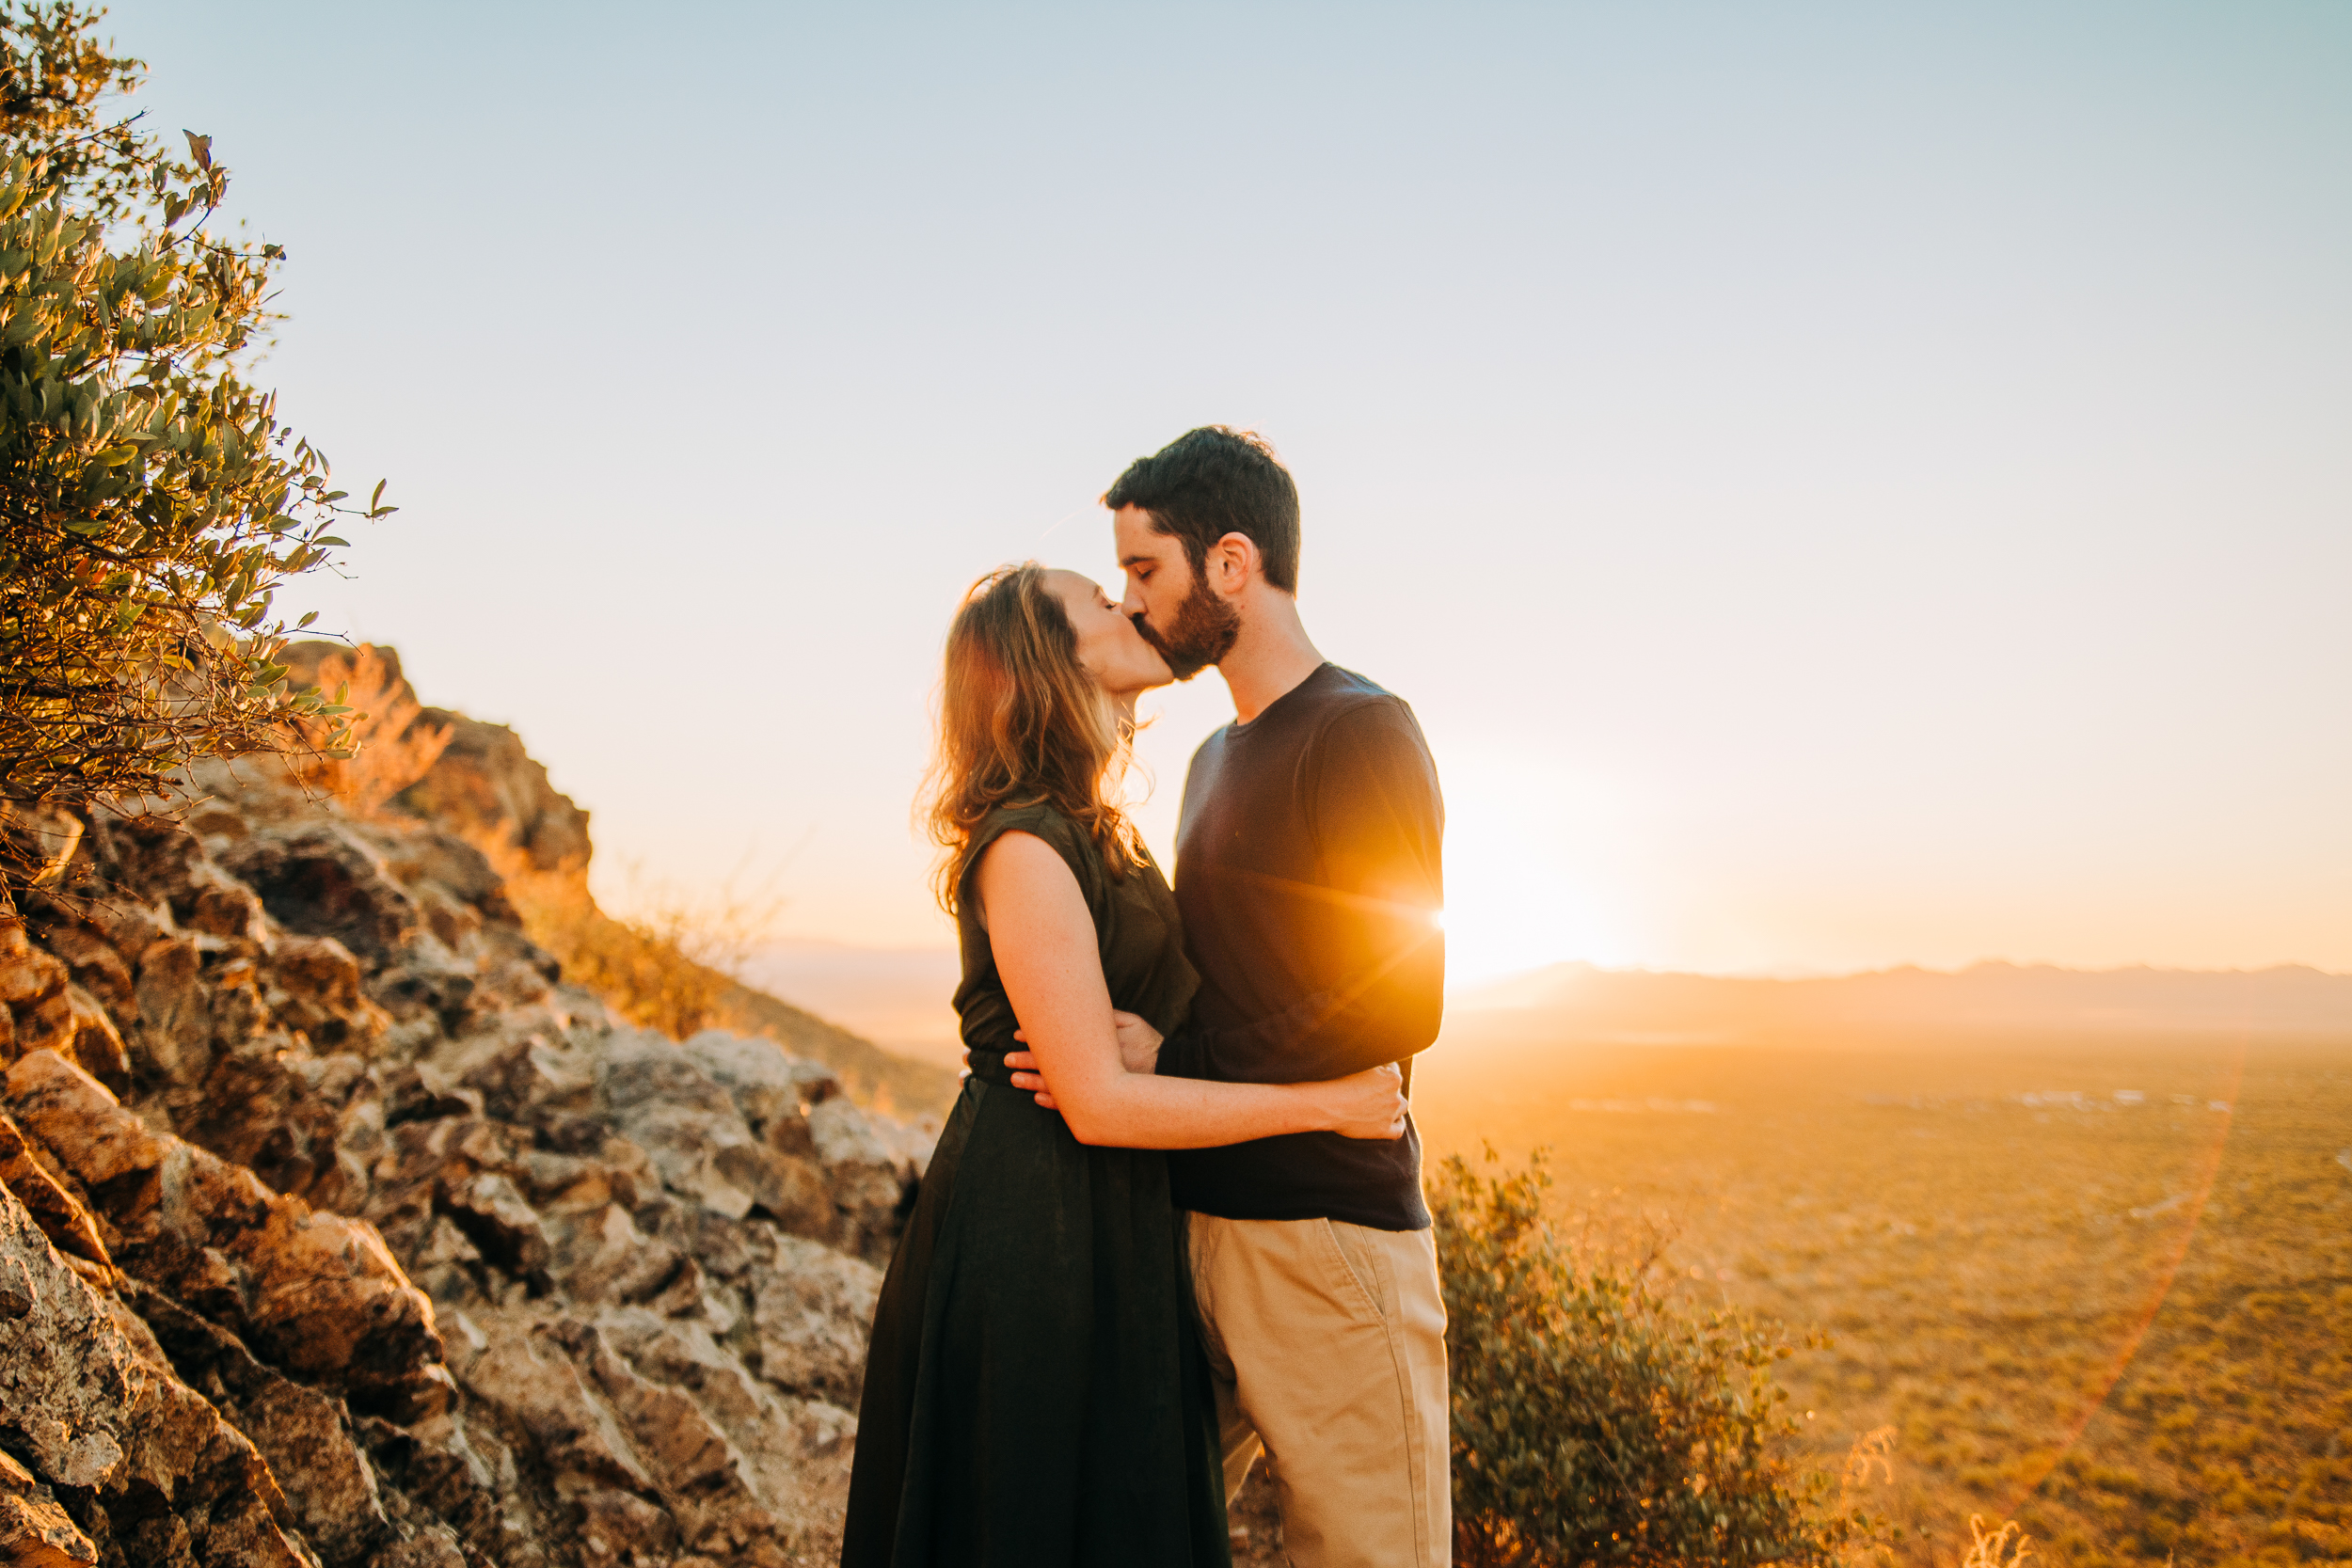 tucson-engagement-photographer-golden-hour-gates-pass-couple-photos-desert-candid-romantic-timeless-photographer-near-me-sunset-saguaro-national-park-embrace-kiss